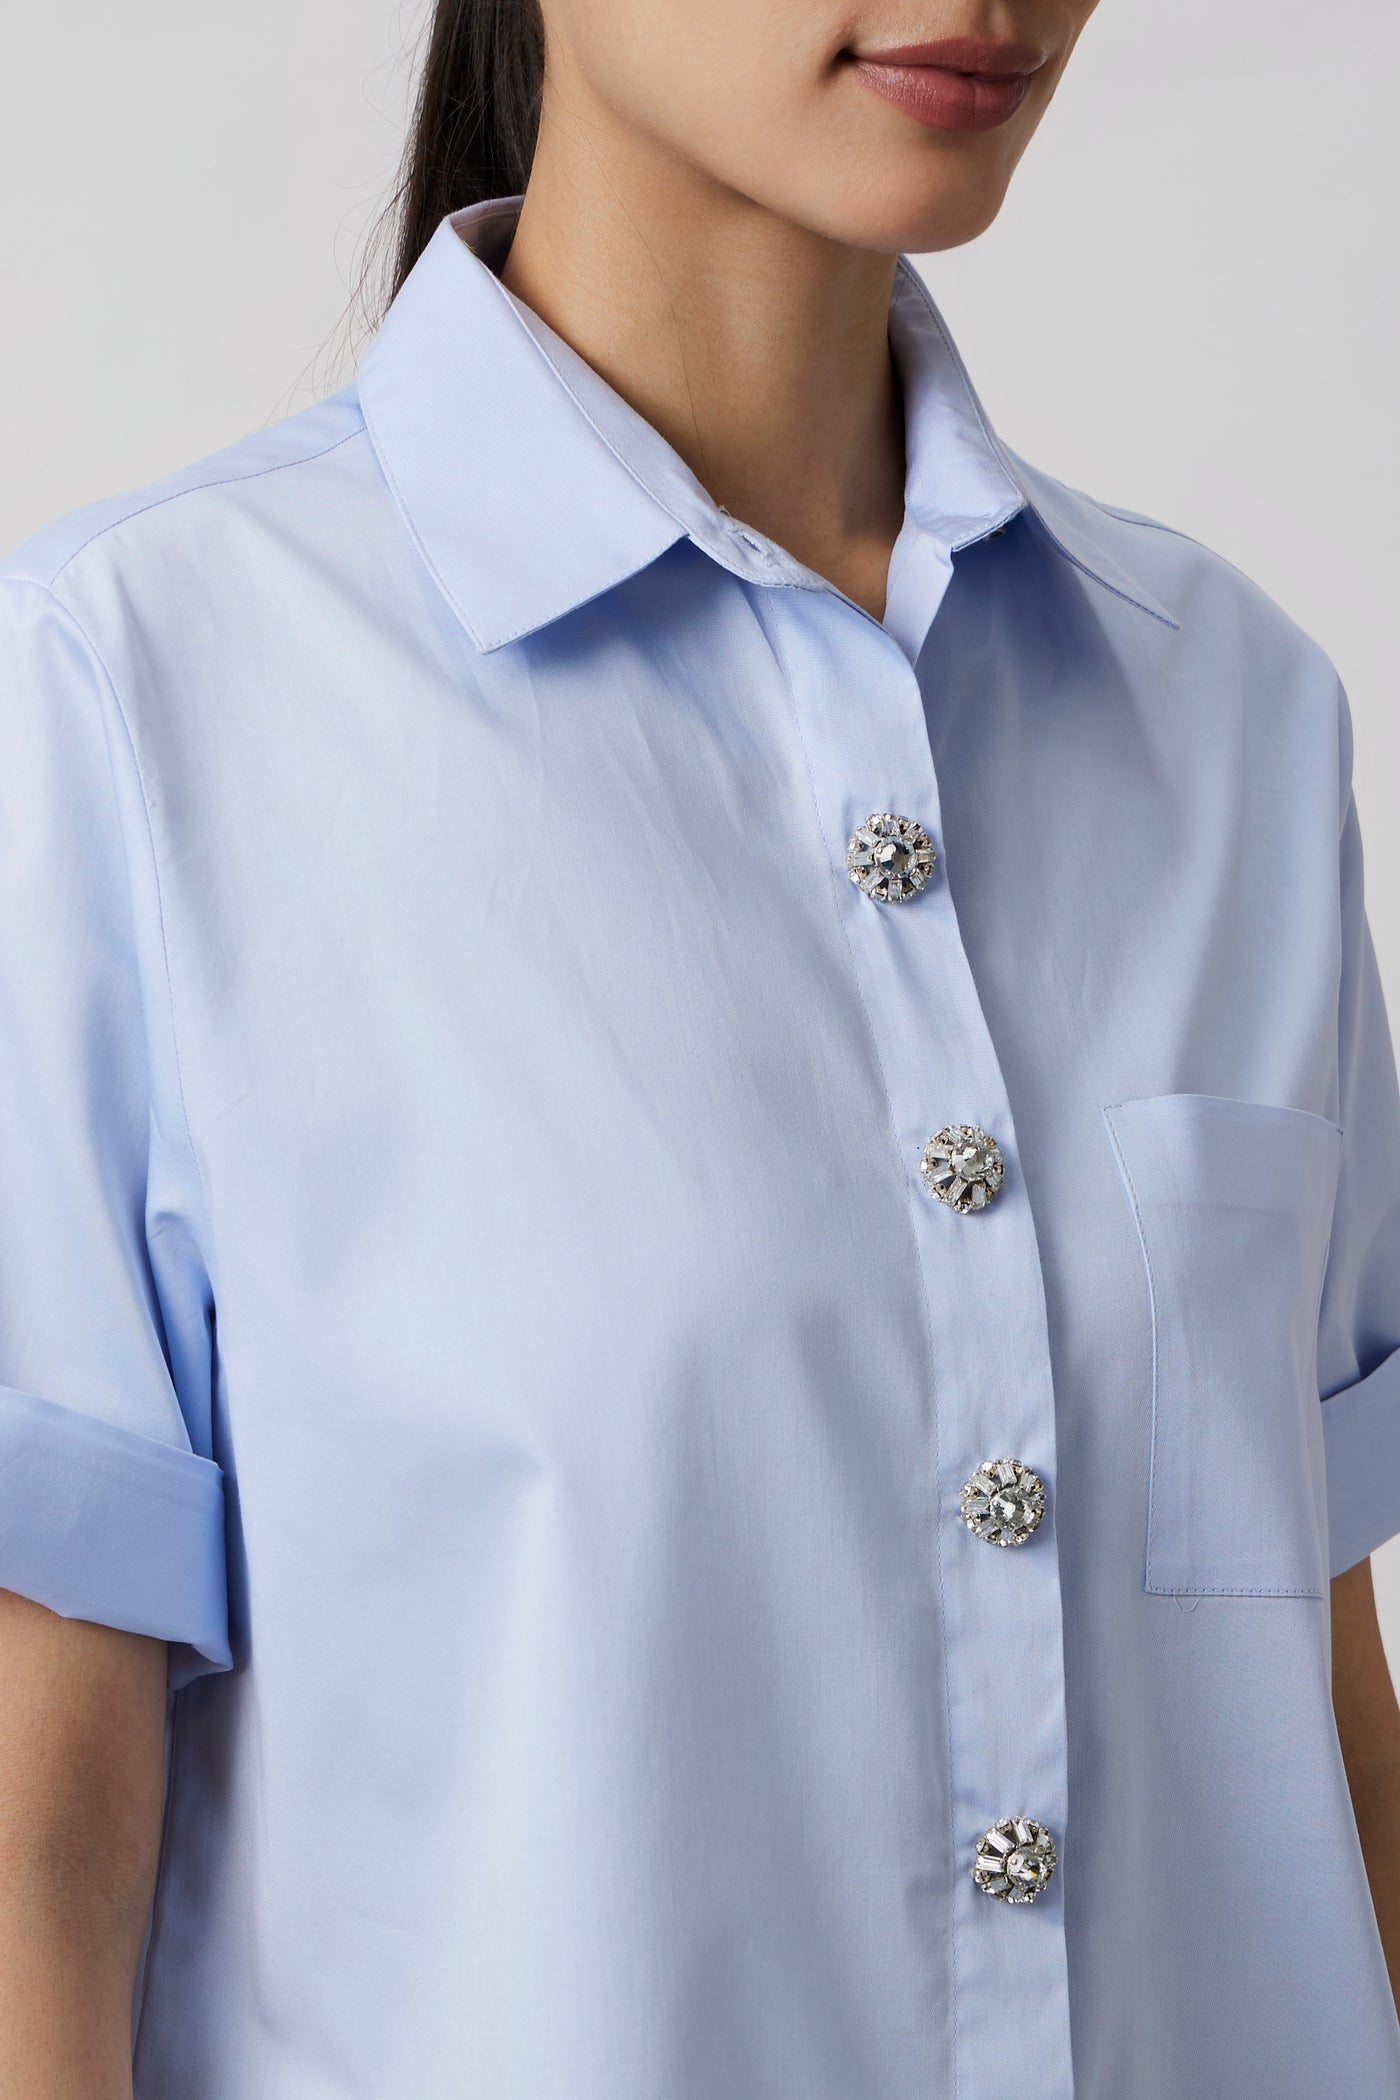 Sky Blue Swarovski Button Shirt